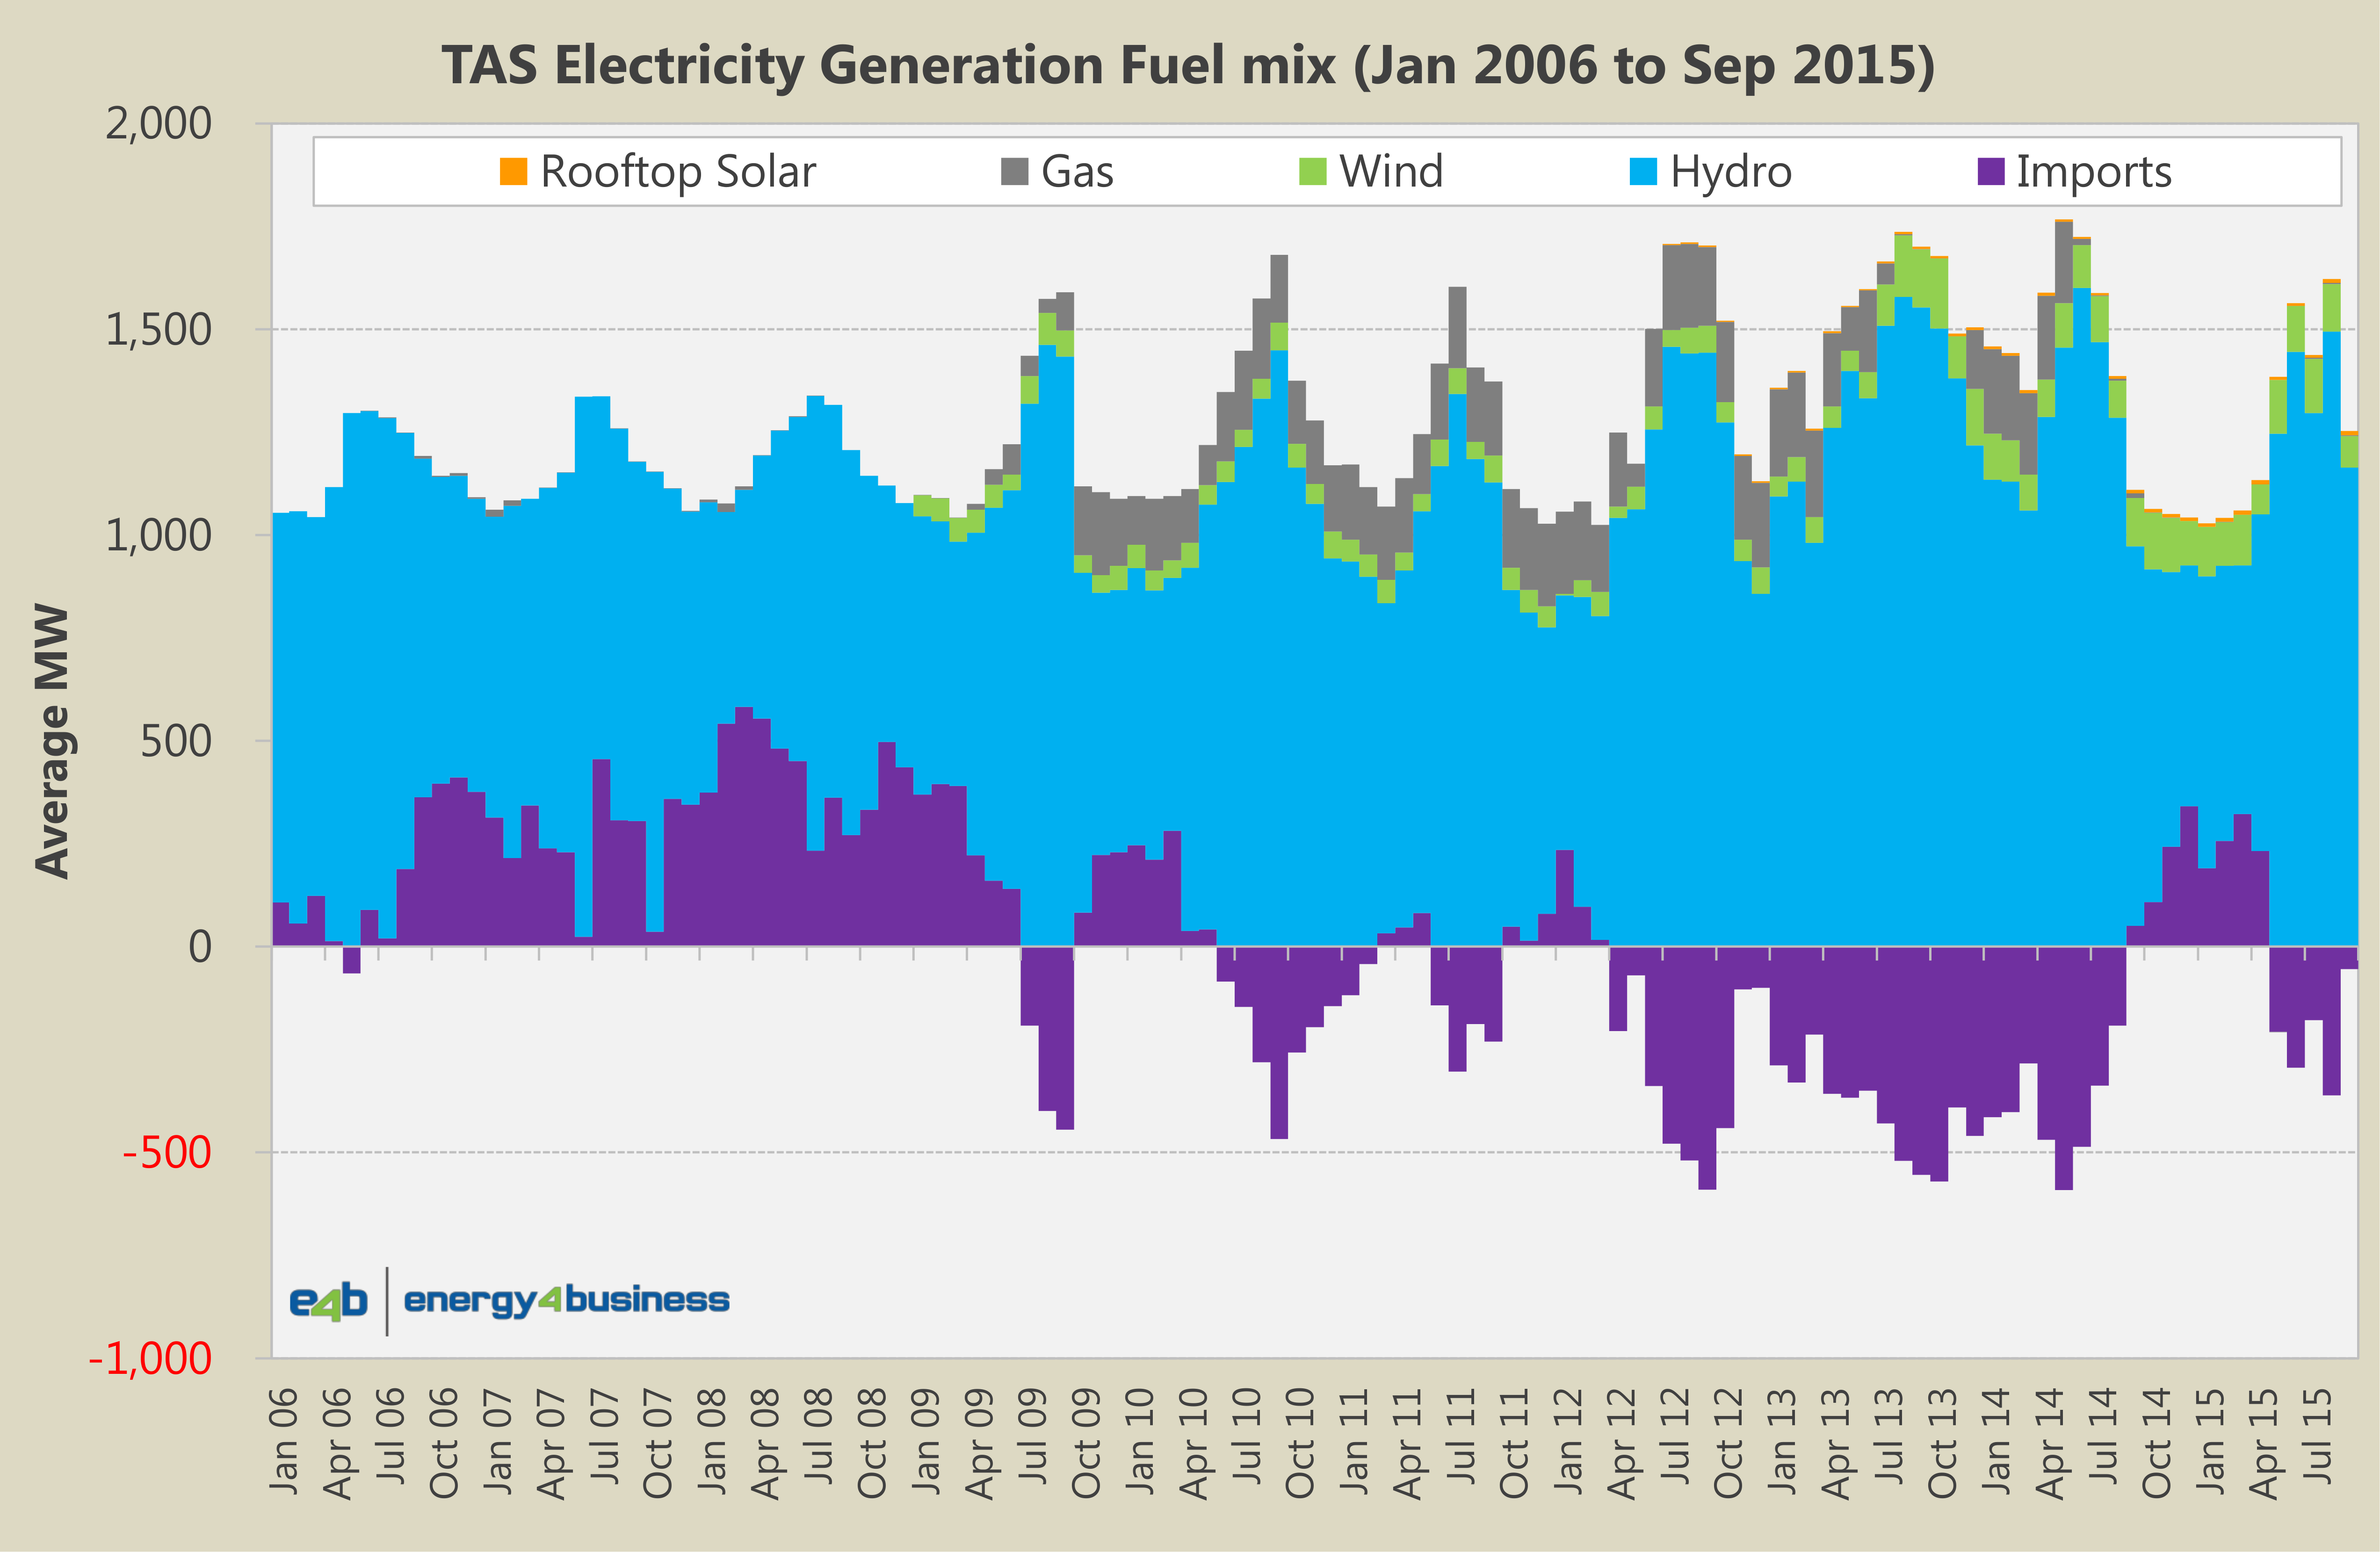 e4b-Change-in-NEM-Generation-Fuel-mix-200601-to-2015095.png